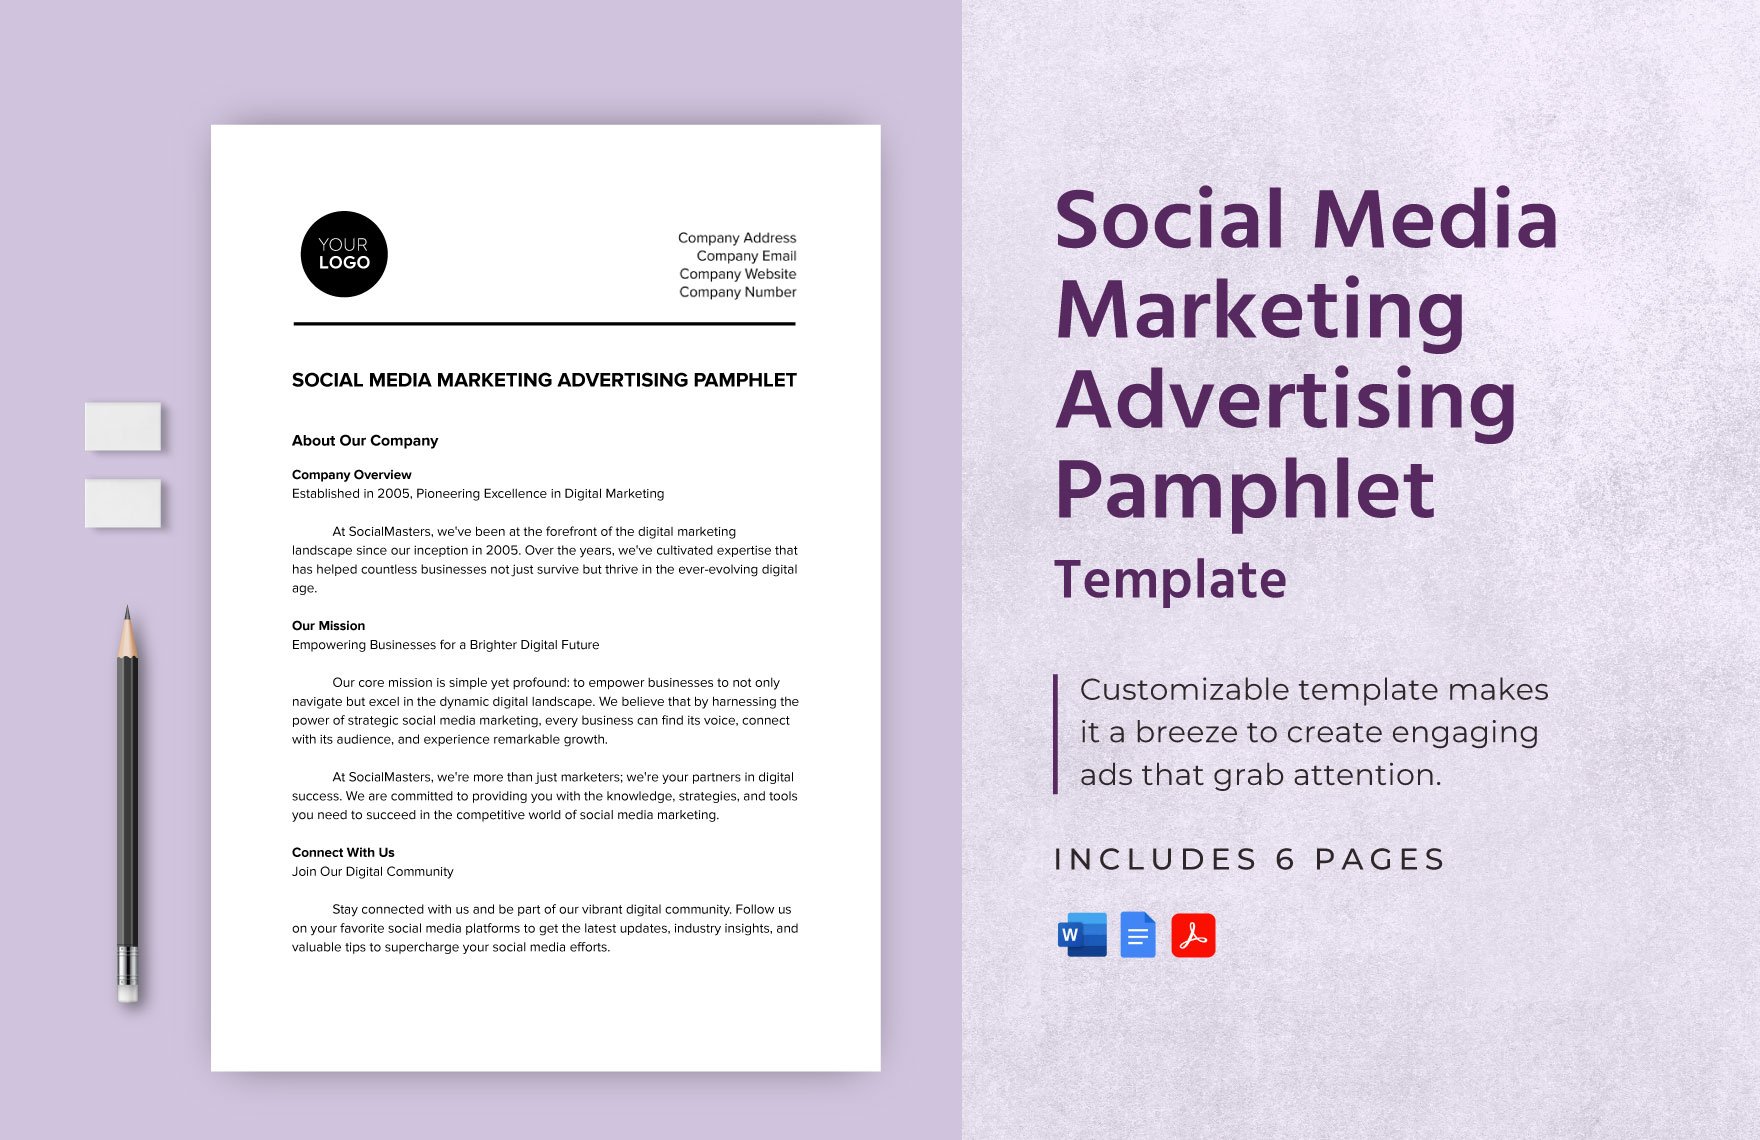 Social Media Marketing Advertising Pamphlet Template in Word, Google Docs, PDF